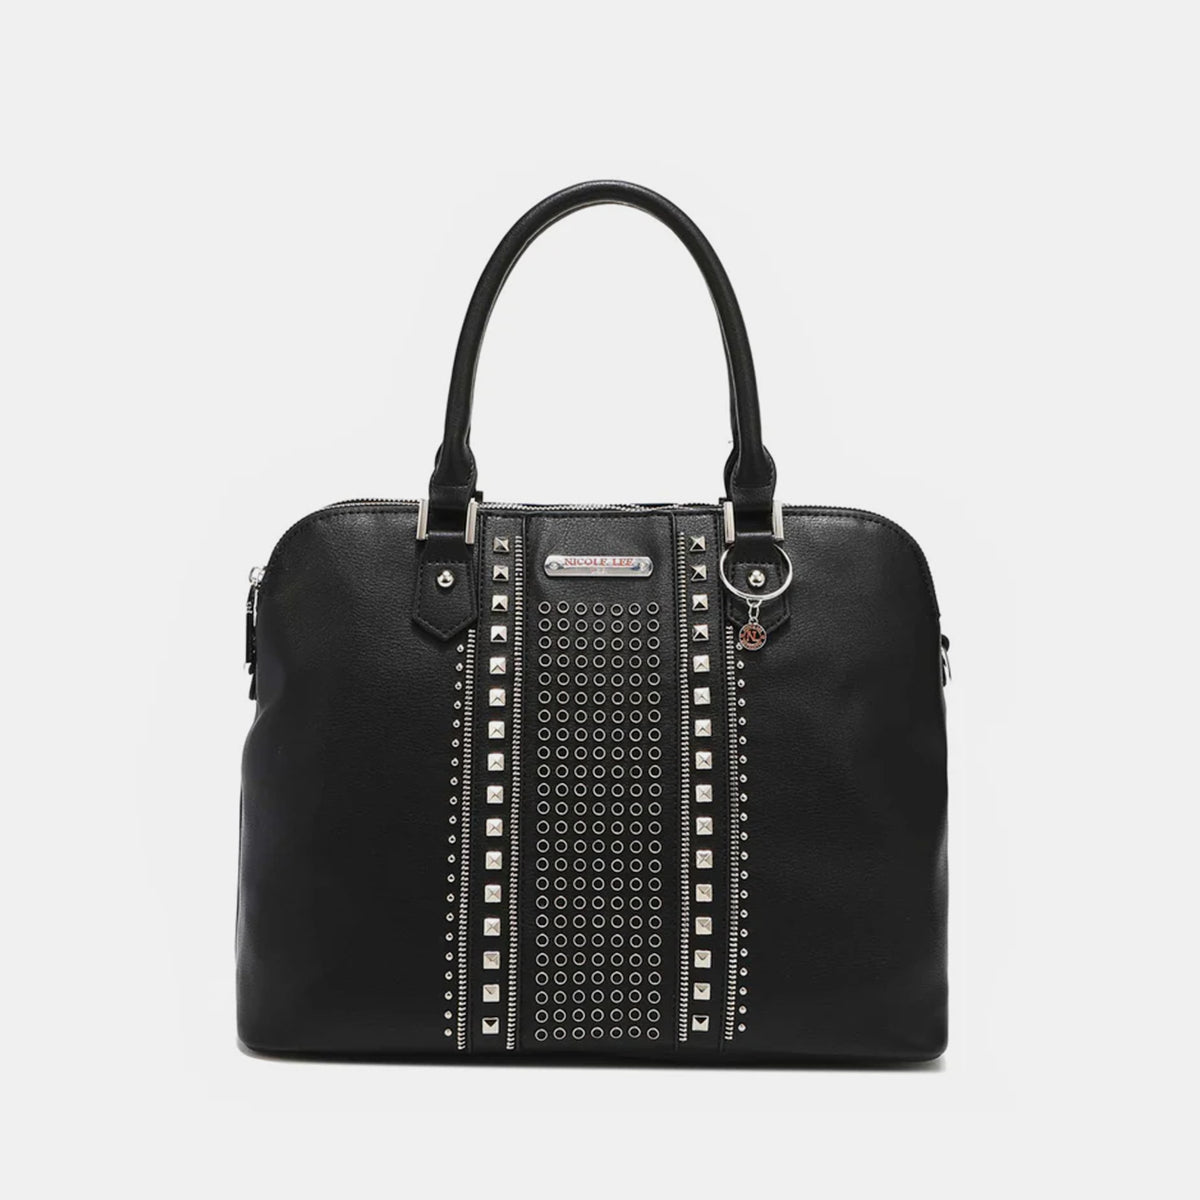 TEEK - NL Studded Decor Handbag BAG TEEK Trend Black  